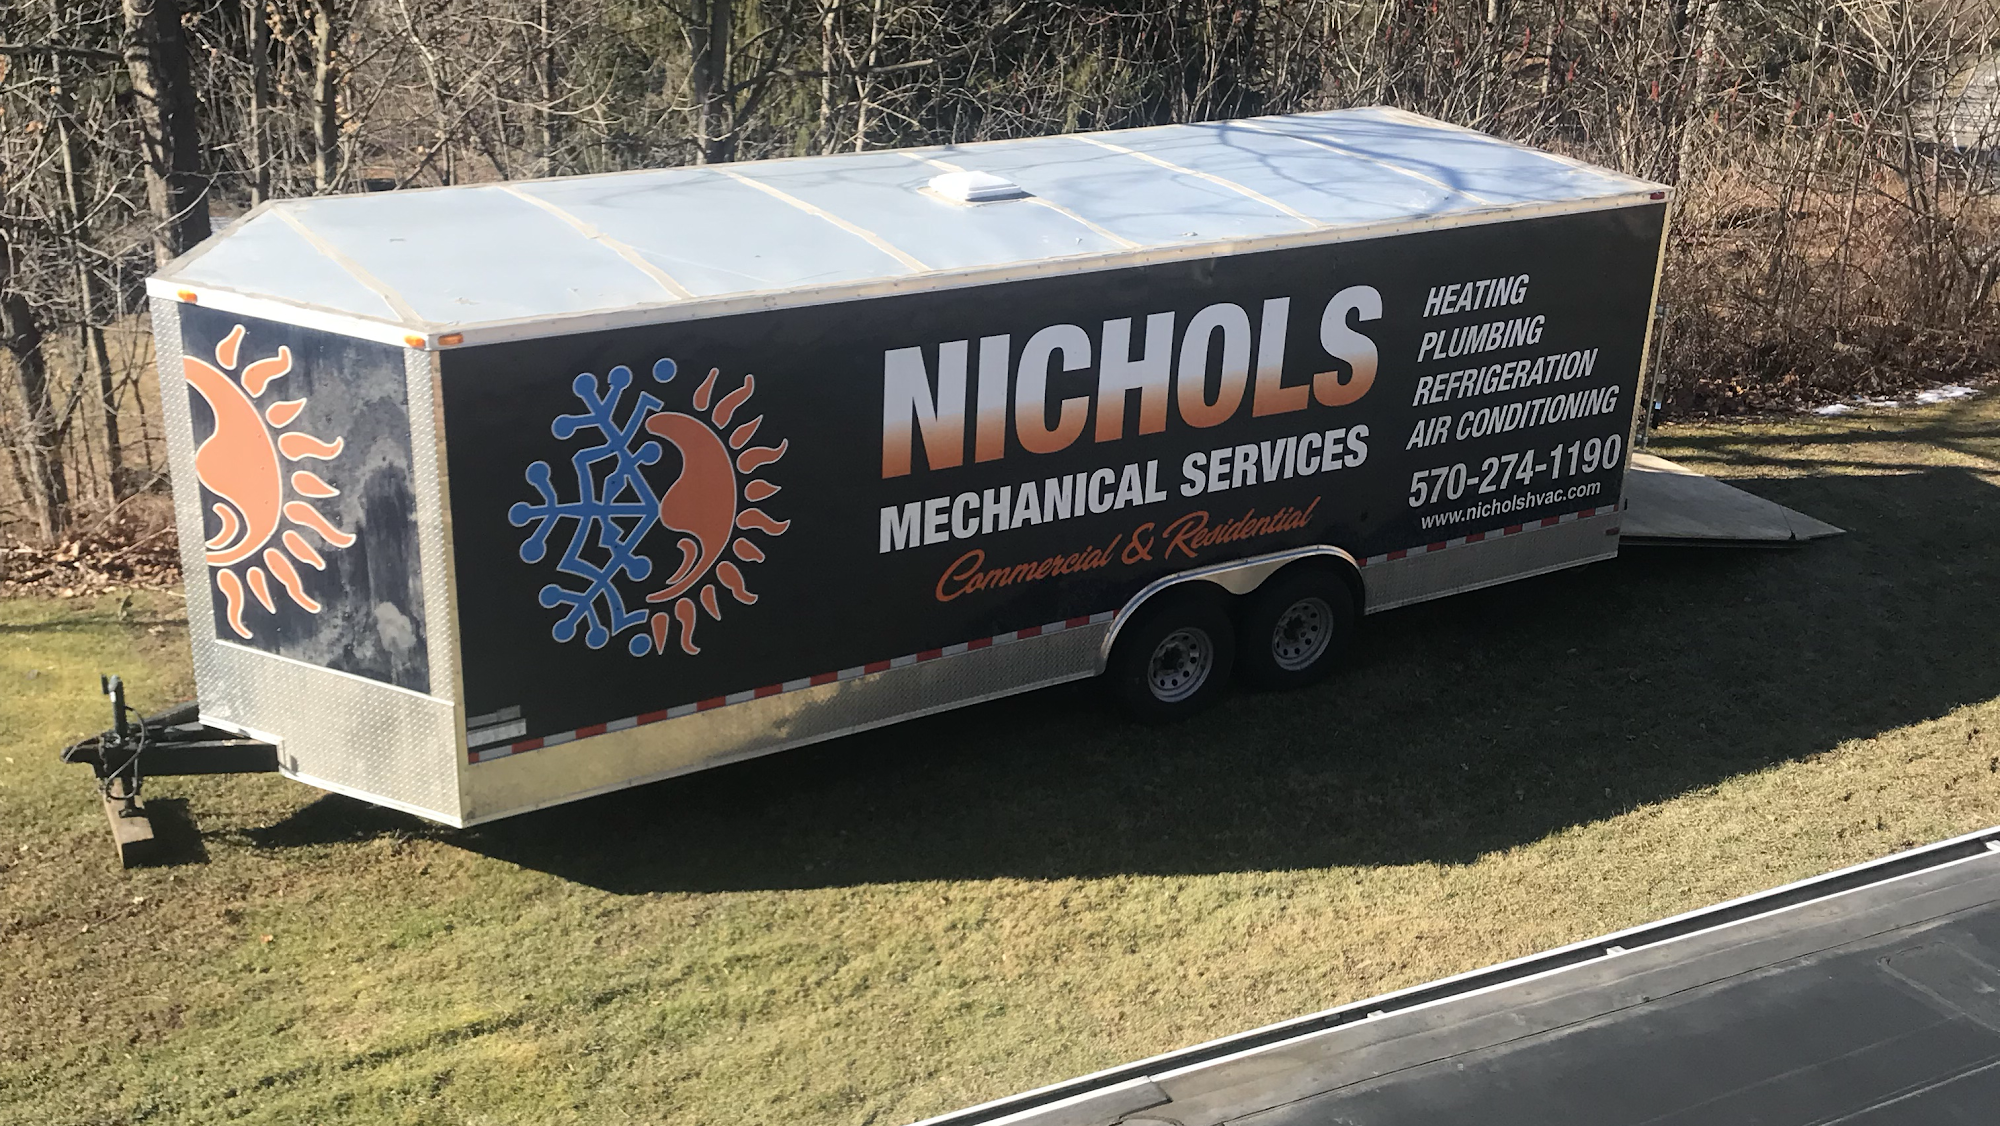 Nichols Mechanical Services 321 N Market St, Selinsgrove Pennsylvania 17870